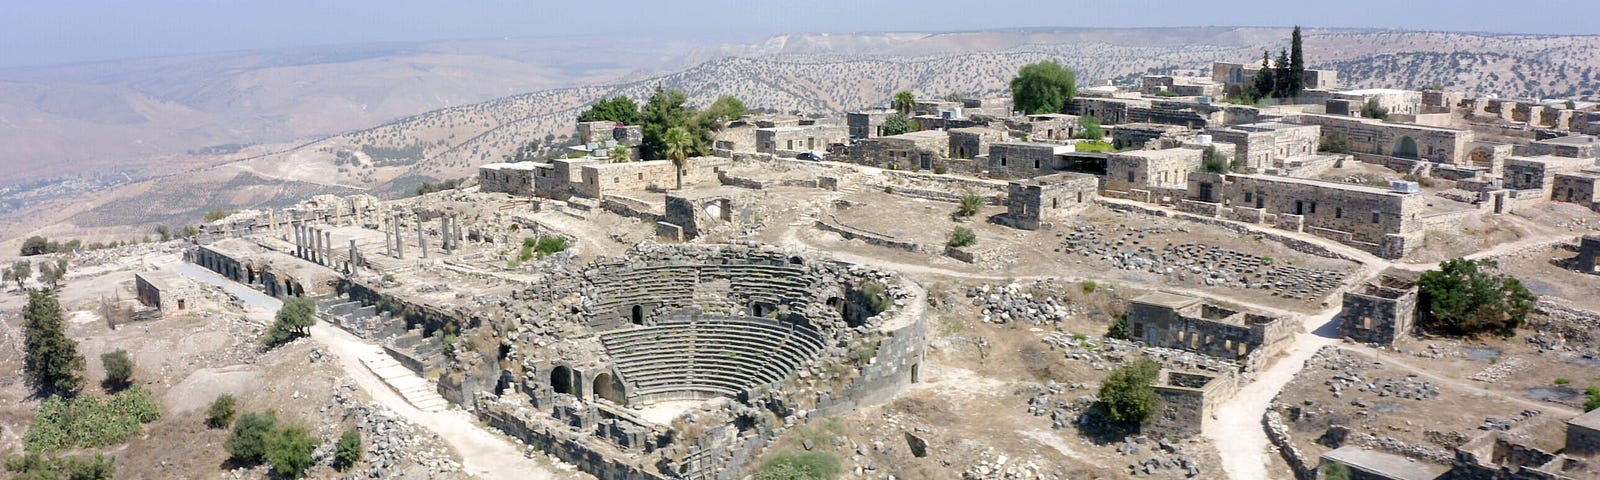 A bird’s eye view of Umm Qais, showing Roman buildings and ruins.